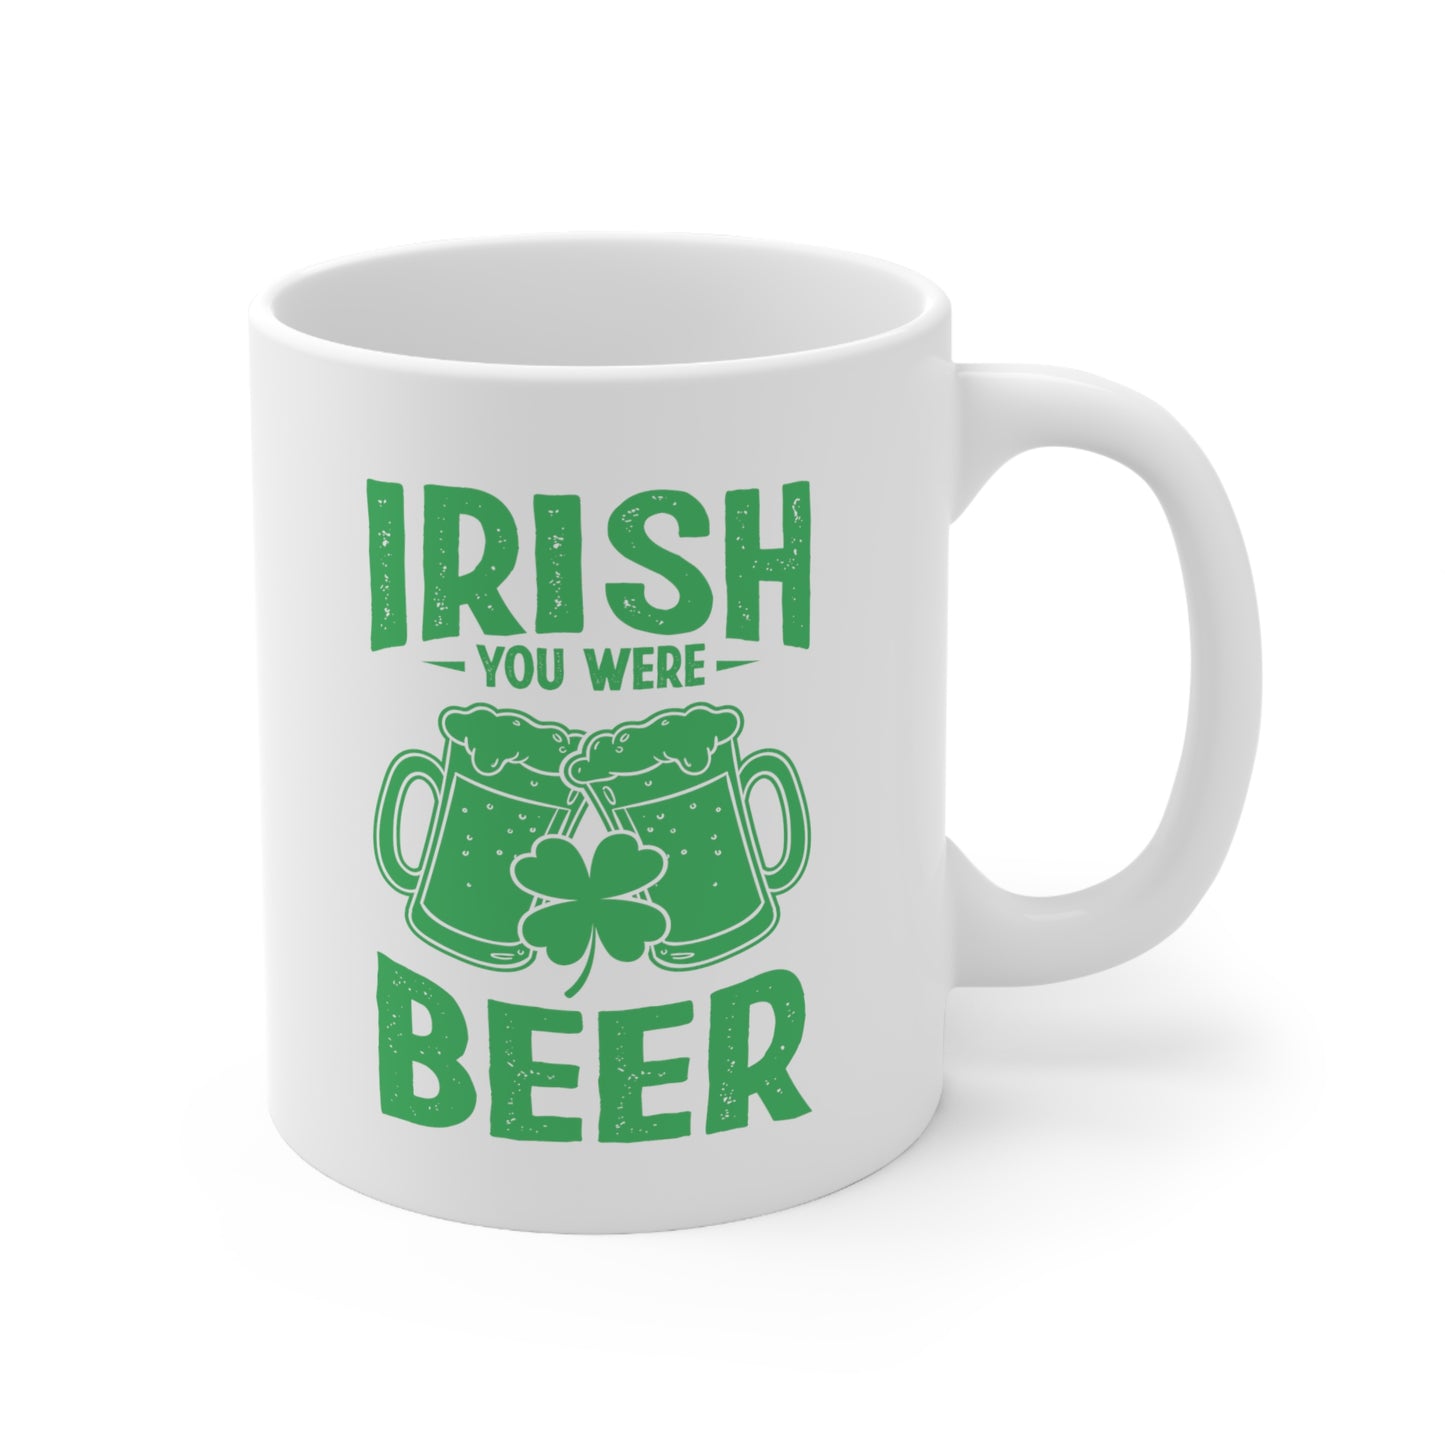 Irish You Were Beer Ceramic Mug 11oz